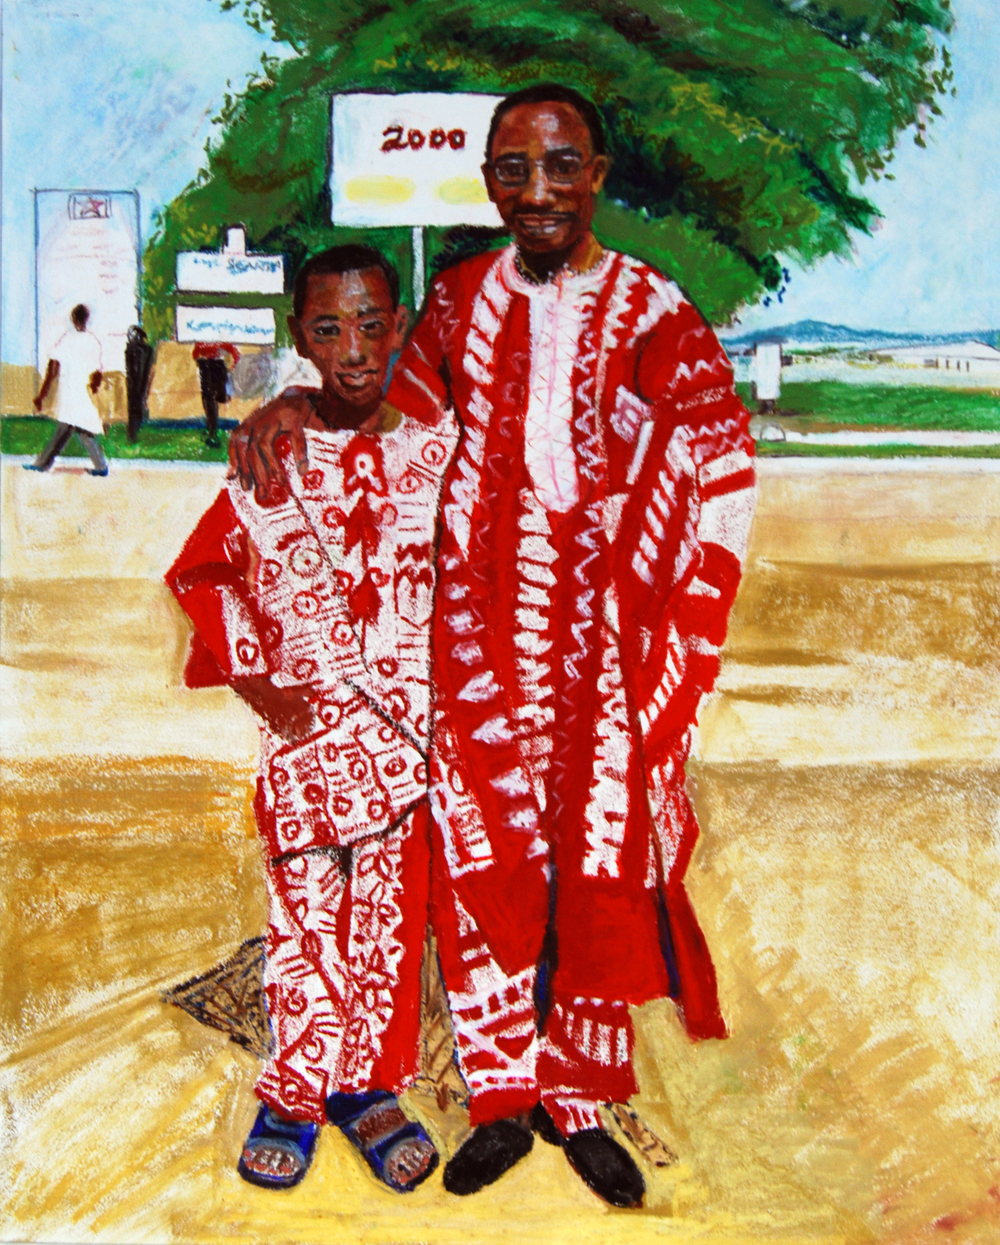 Mr. Biaye and His Son Karim on Korite, Eid, Accra, Ghana, 2000.